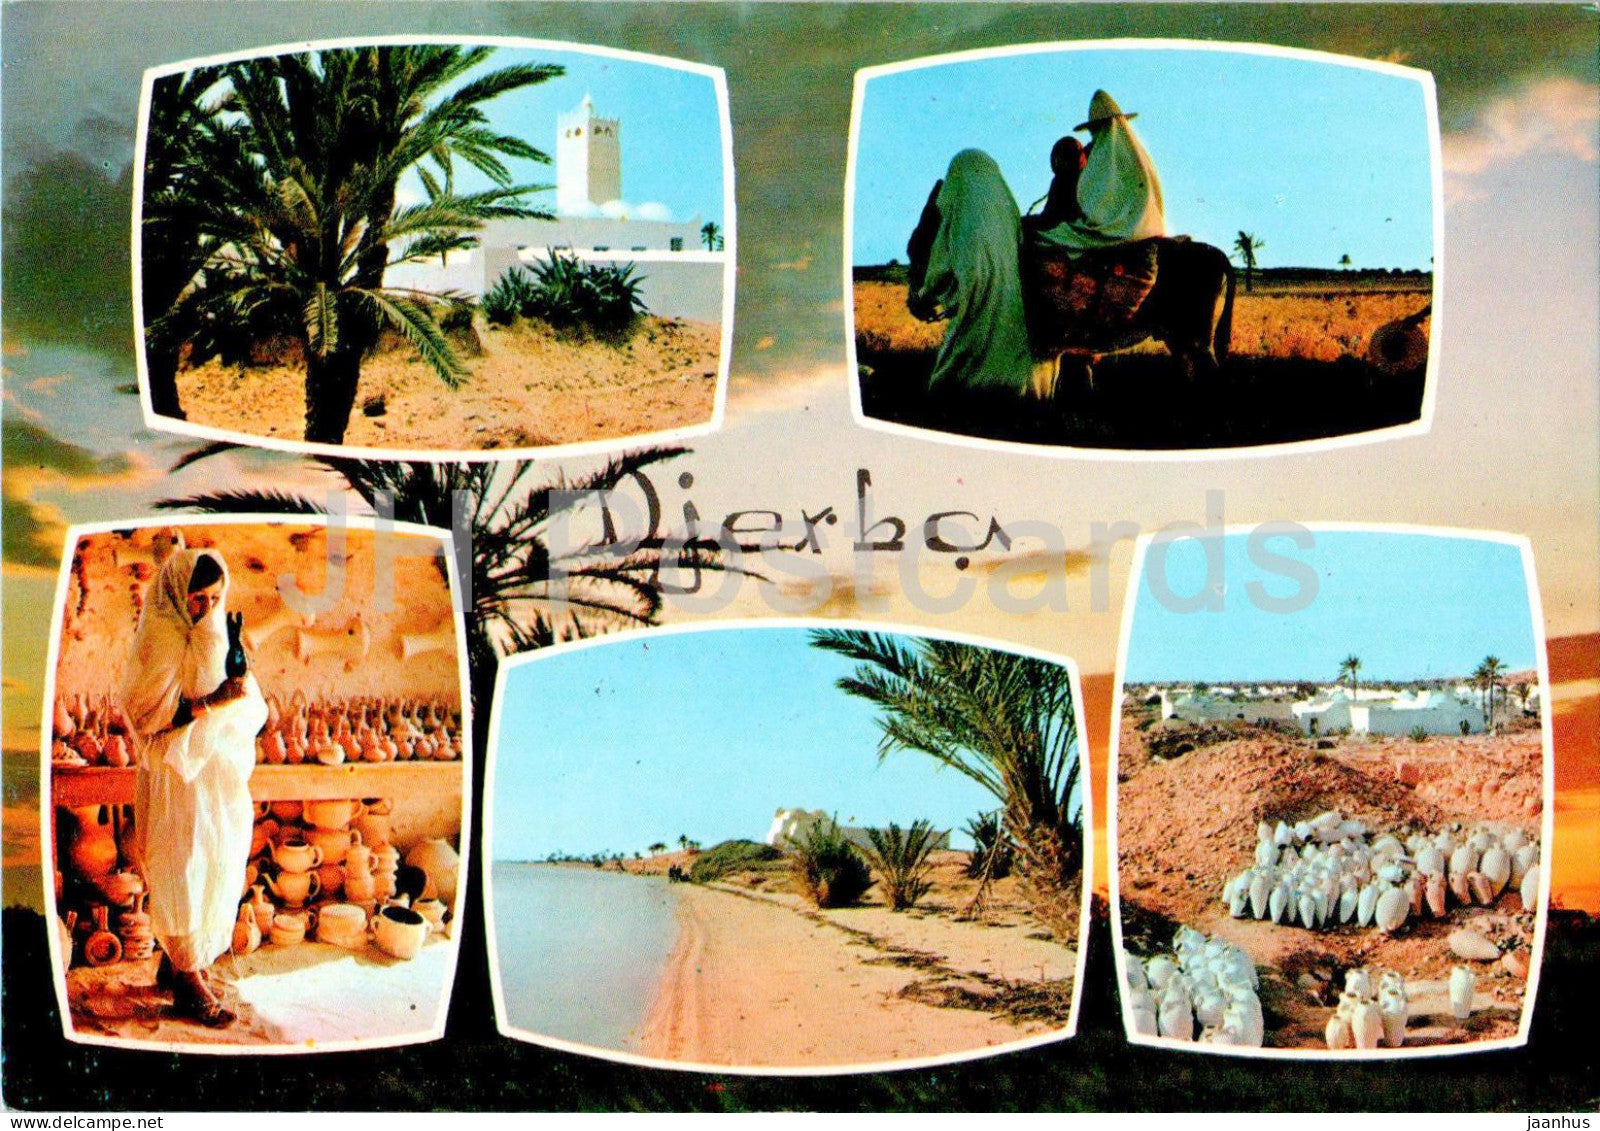 Tunisie de Toujours - Djerba - multiview - H061 - Tunisia - unused - JH Postcards